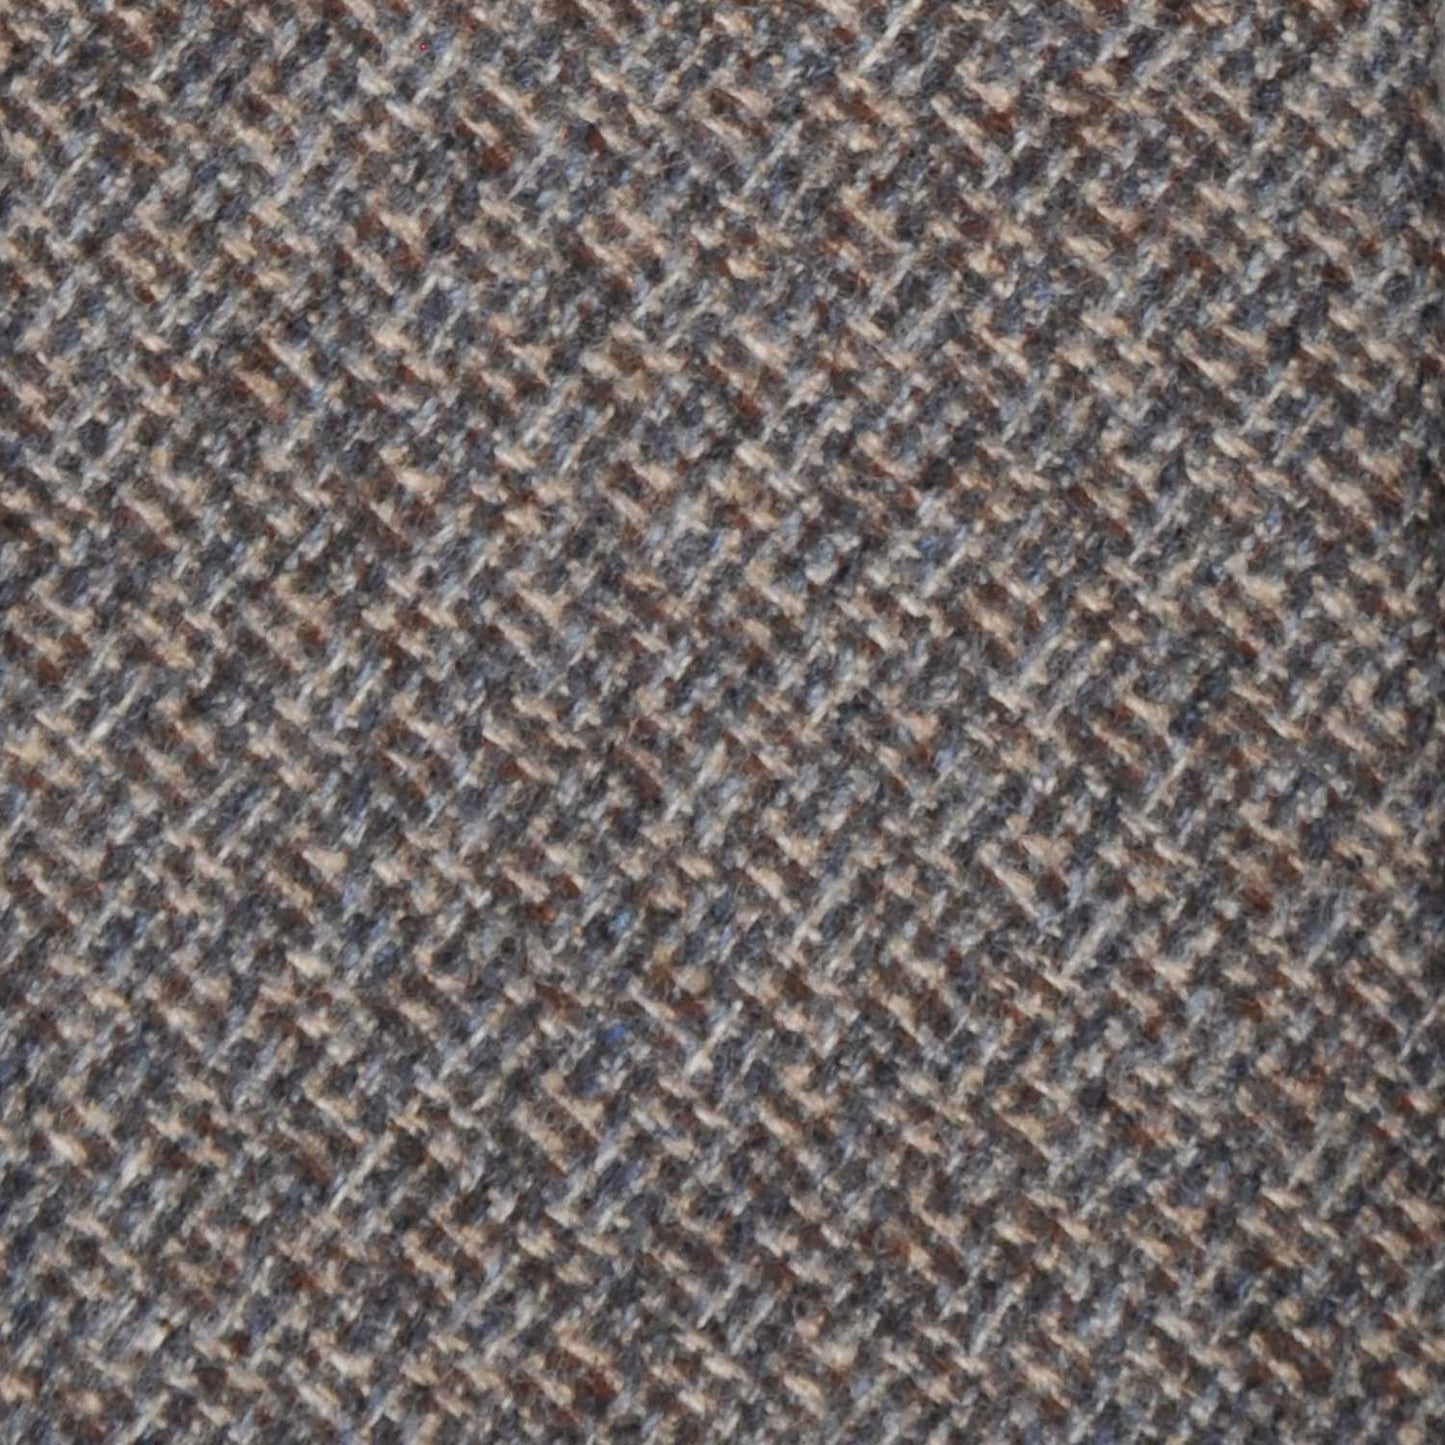 Greige Wool Tie Unlined 3 Folds Canvas Texture